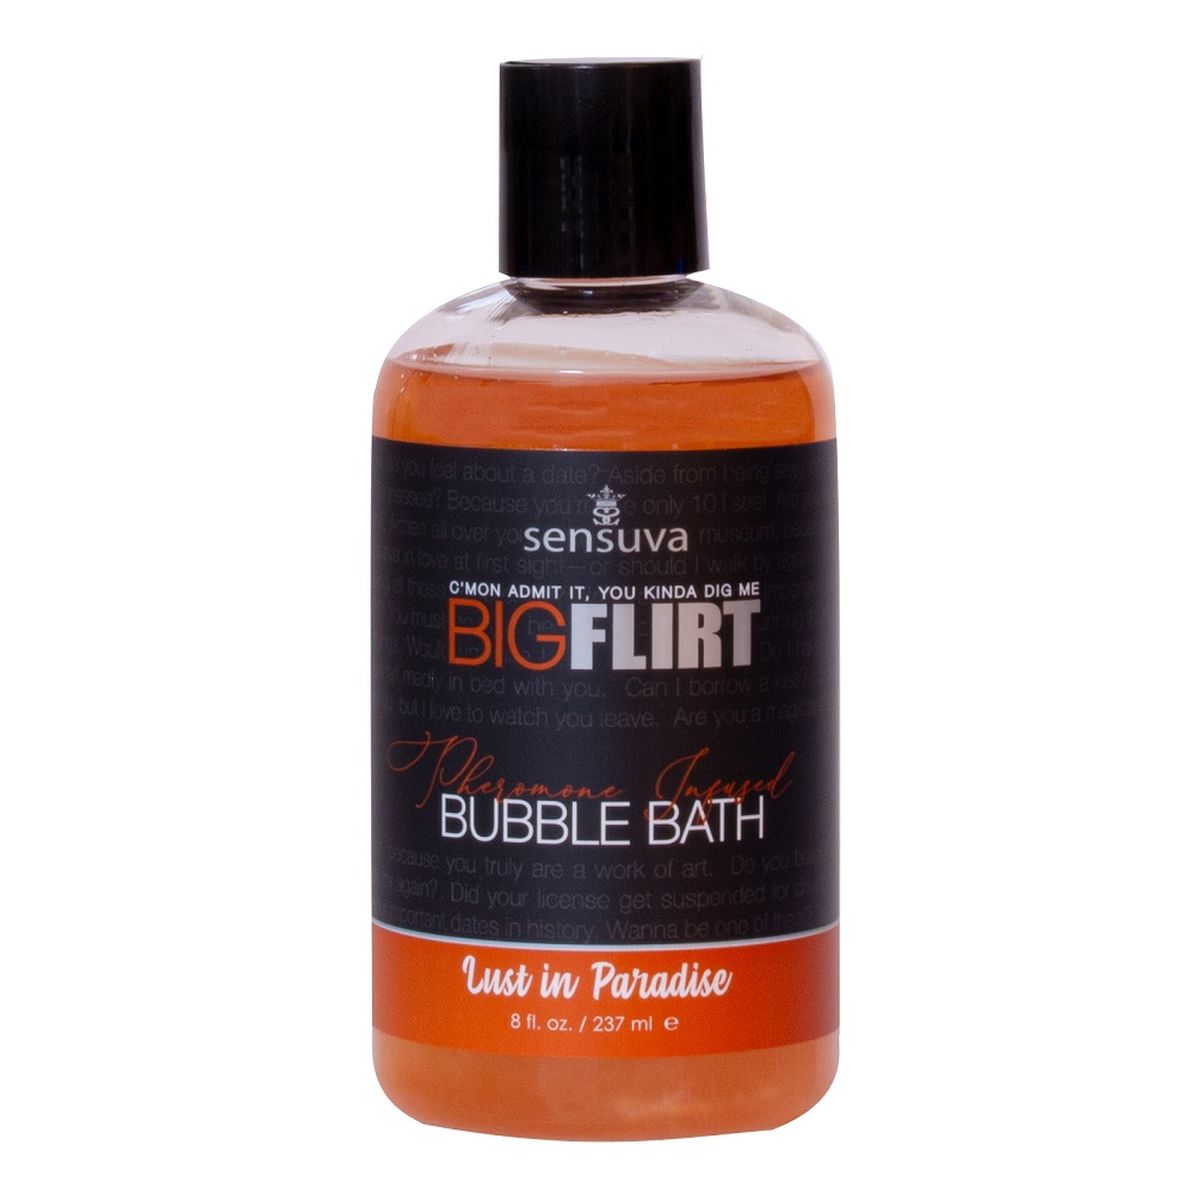 Sensuva Big flirt pheromone infused bubble bath płyn do kąpieli z feromonami lust in paradise 237ml